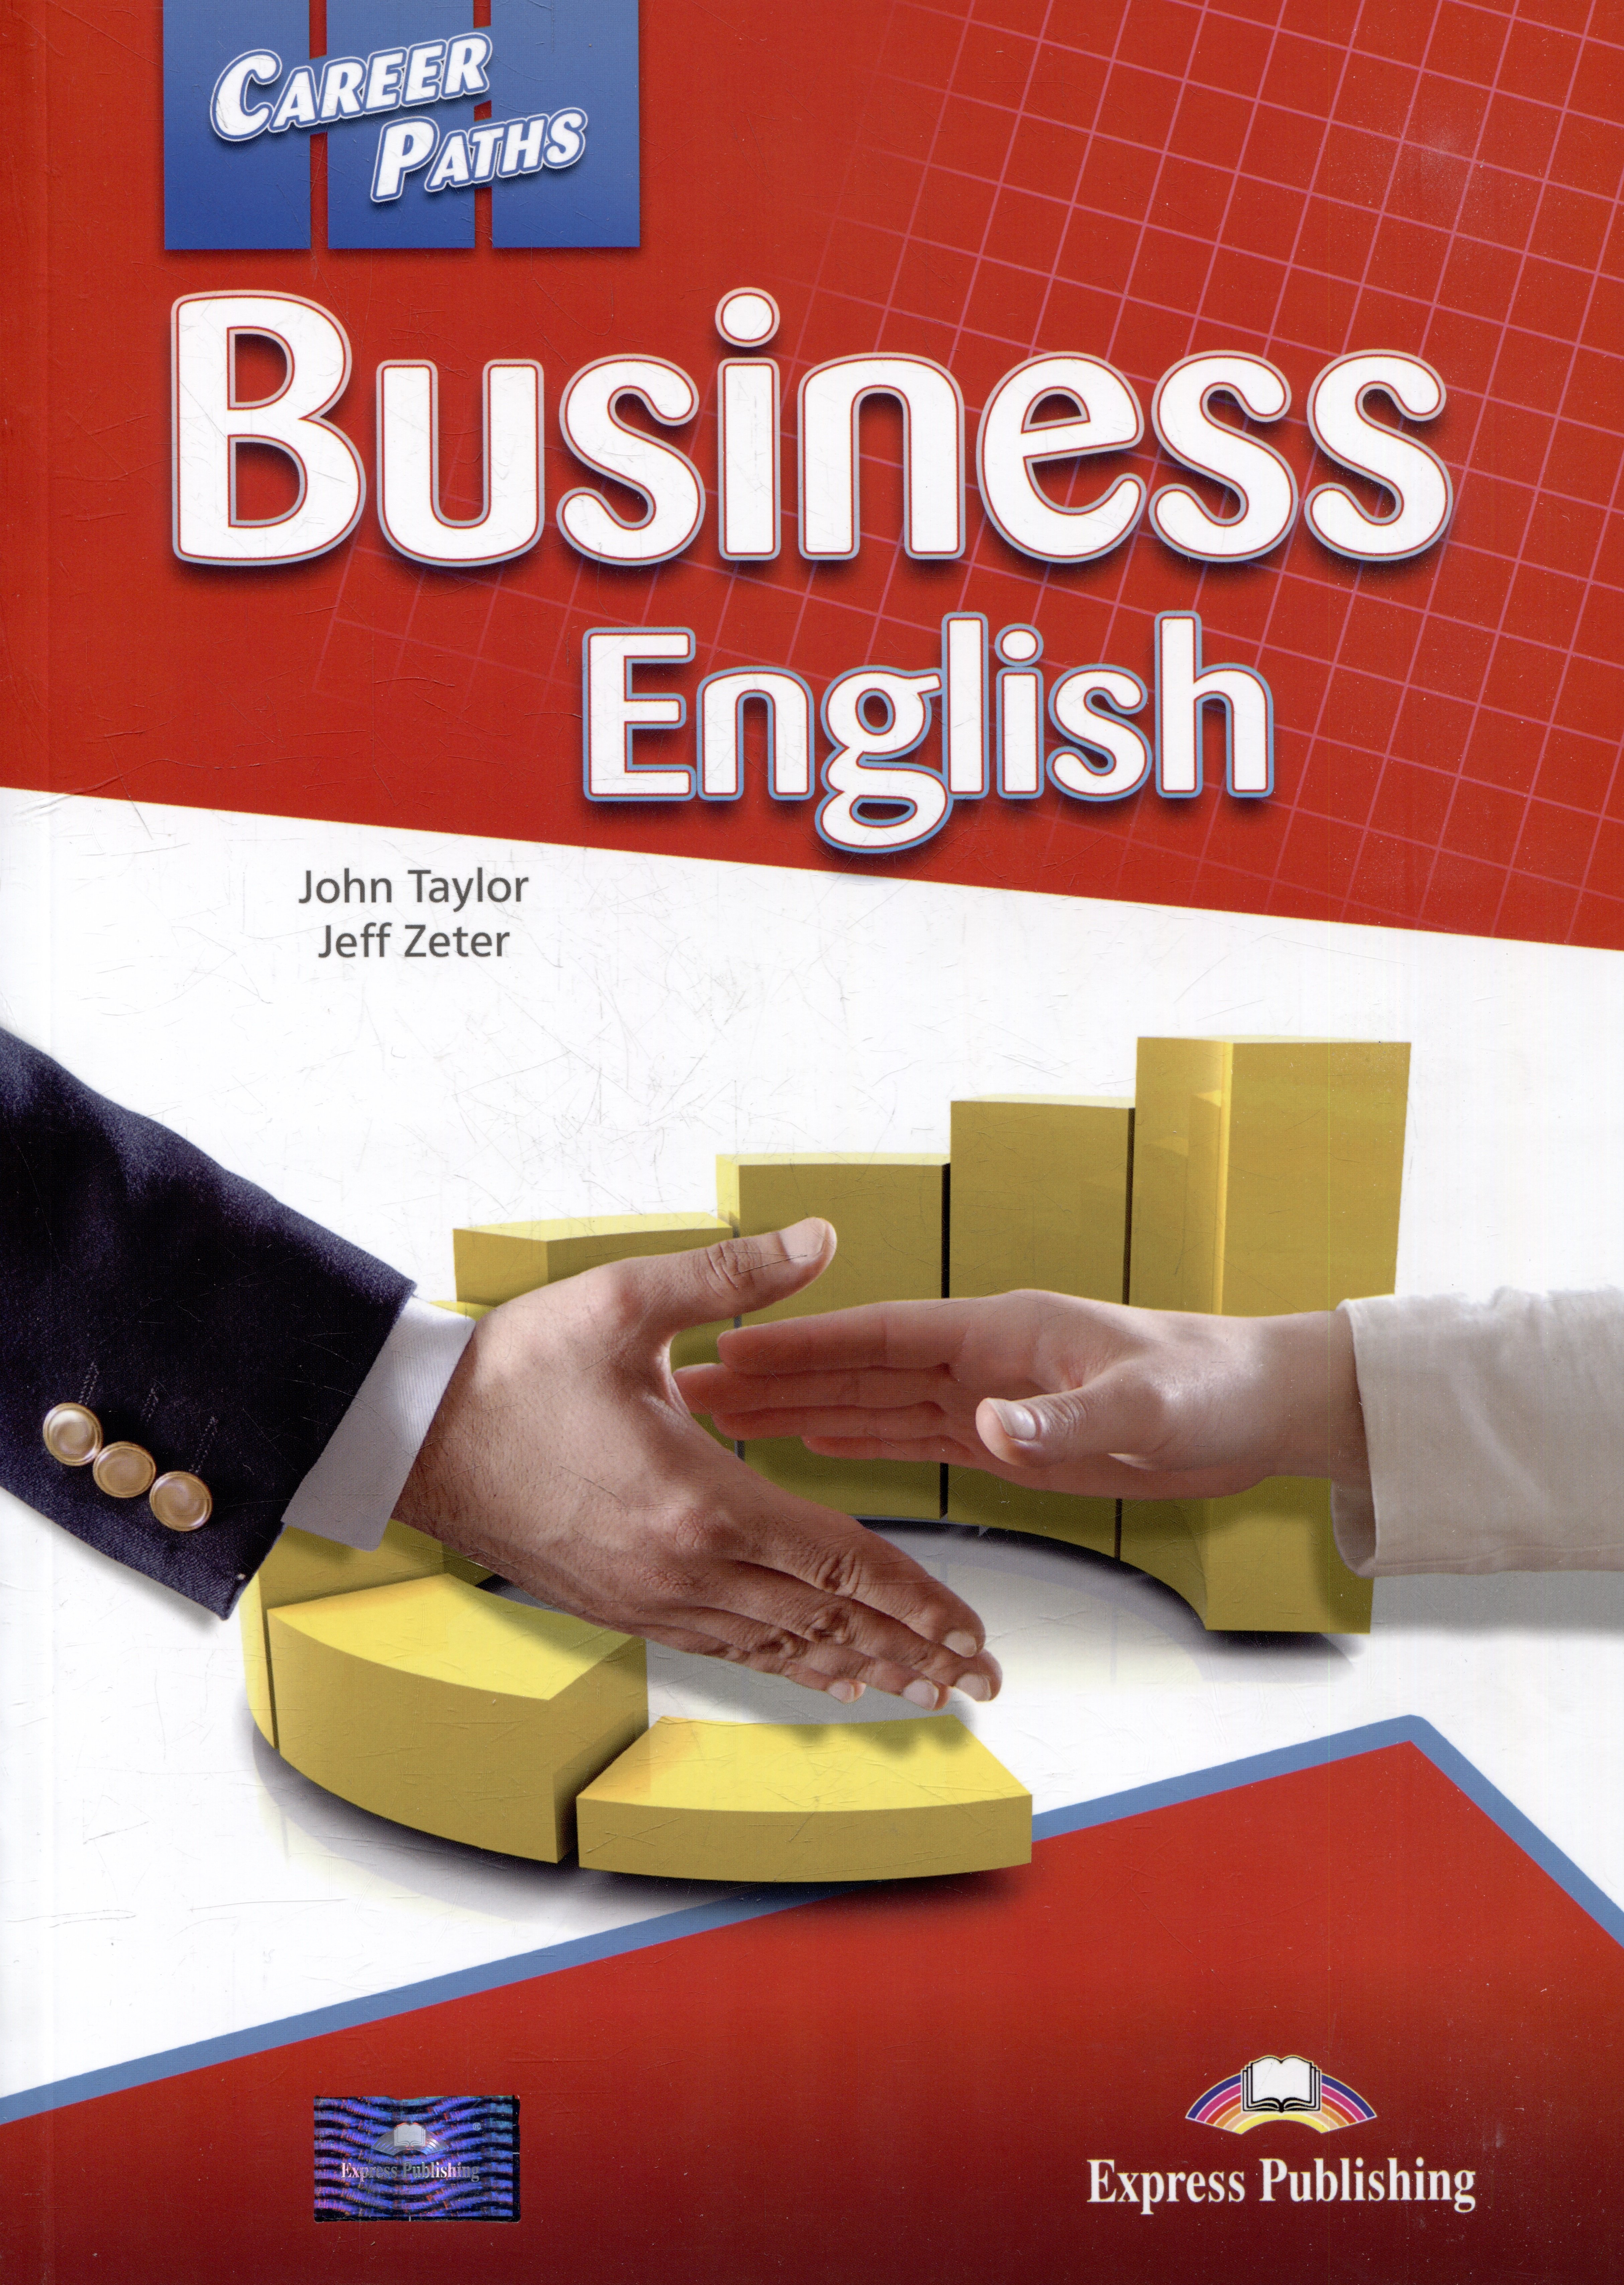 Про бизнес на английском. Бизнес английский учебник Business English. Business English учебник John Taylor. Business English учебник Express Publishing. Career Paths Business English.